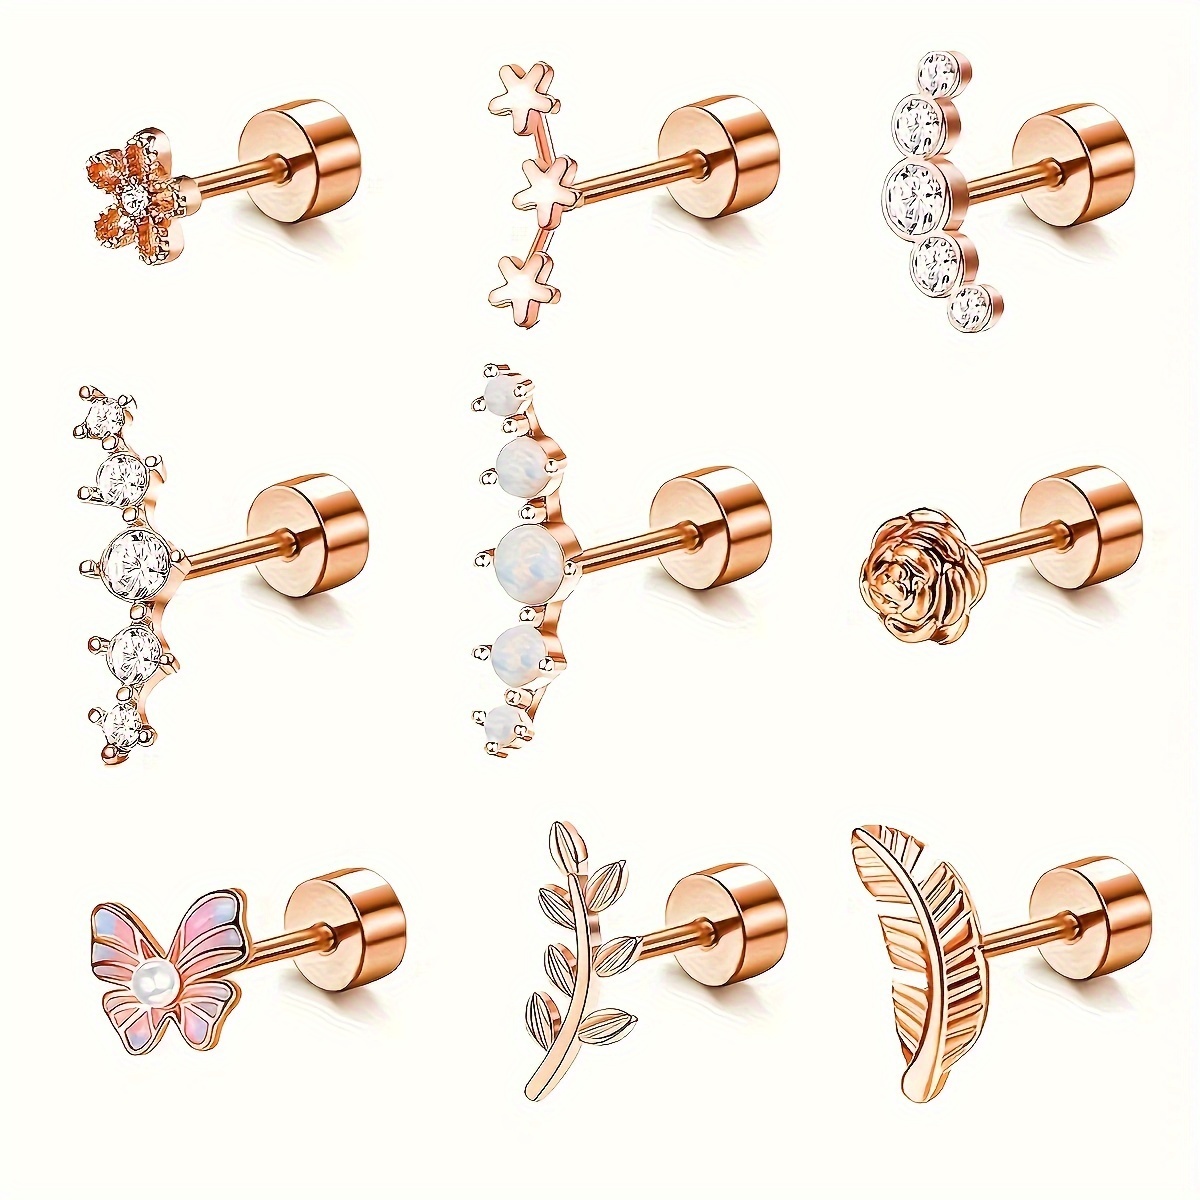 

9pcs Elegant & Sexy Cartilage Stud Earrings Set For Women, Surgical Steel Flat Back, Featuring Opal, Butterfly, Flower Designs & Cz Embellishments, Versatile Tragus Helix Piercing Jewelry